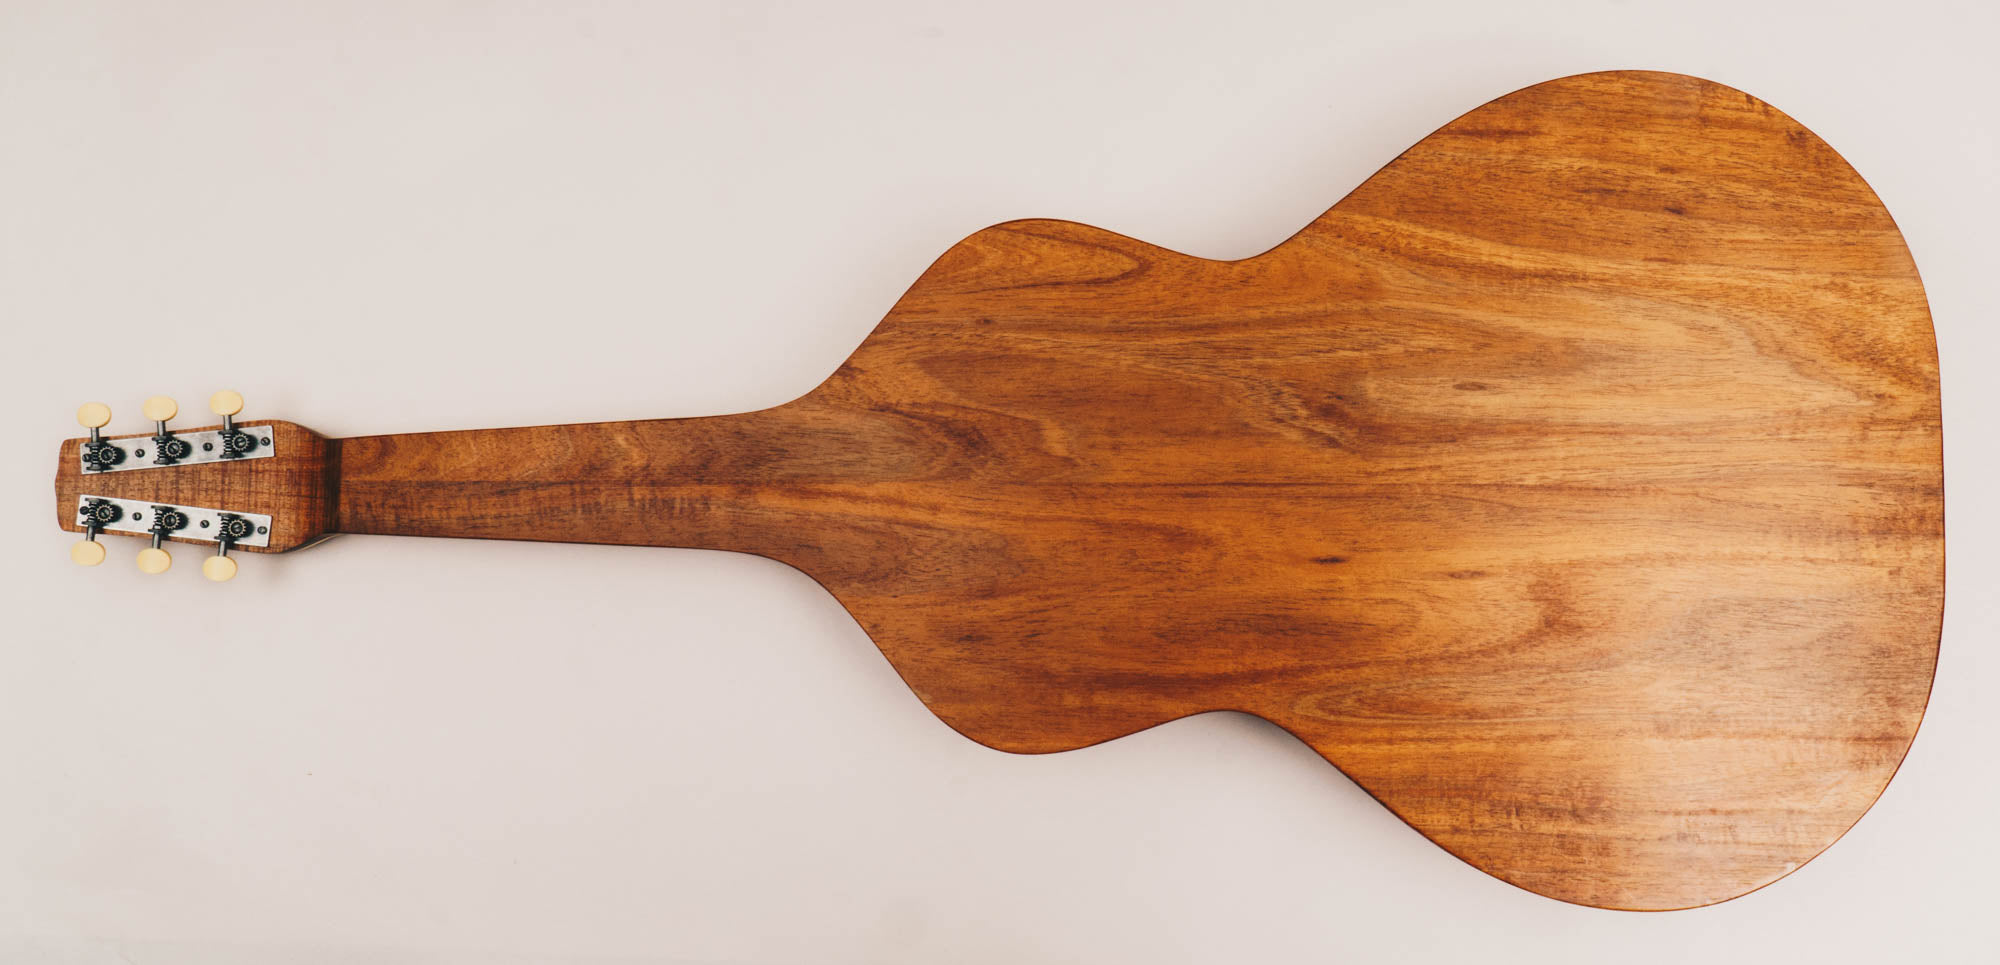 Tasmanian Blackwood Style 3 Weissenborn Acoustic Lap Steel Slide Guitar by master luthier Richard Wilson. Handcrafted in Australia. Serial no. RW1901-222.